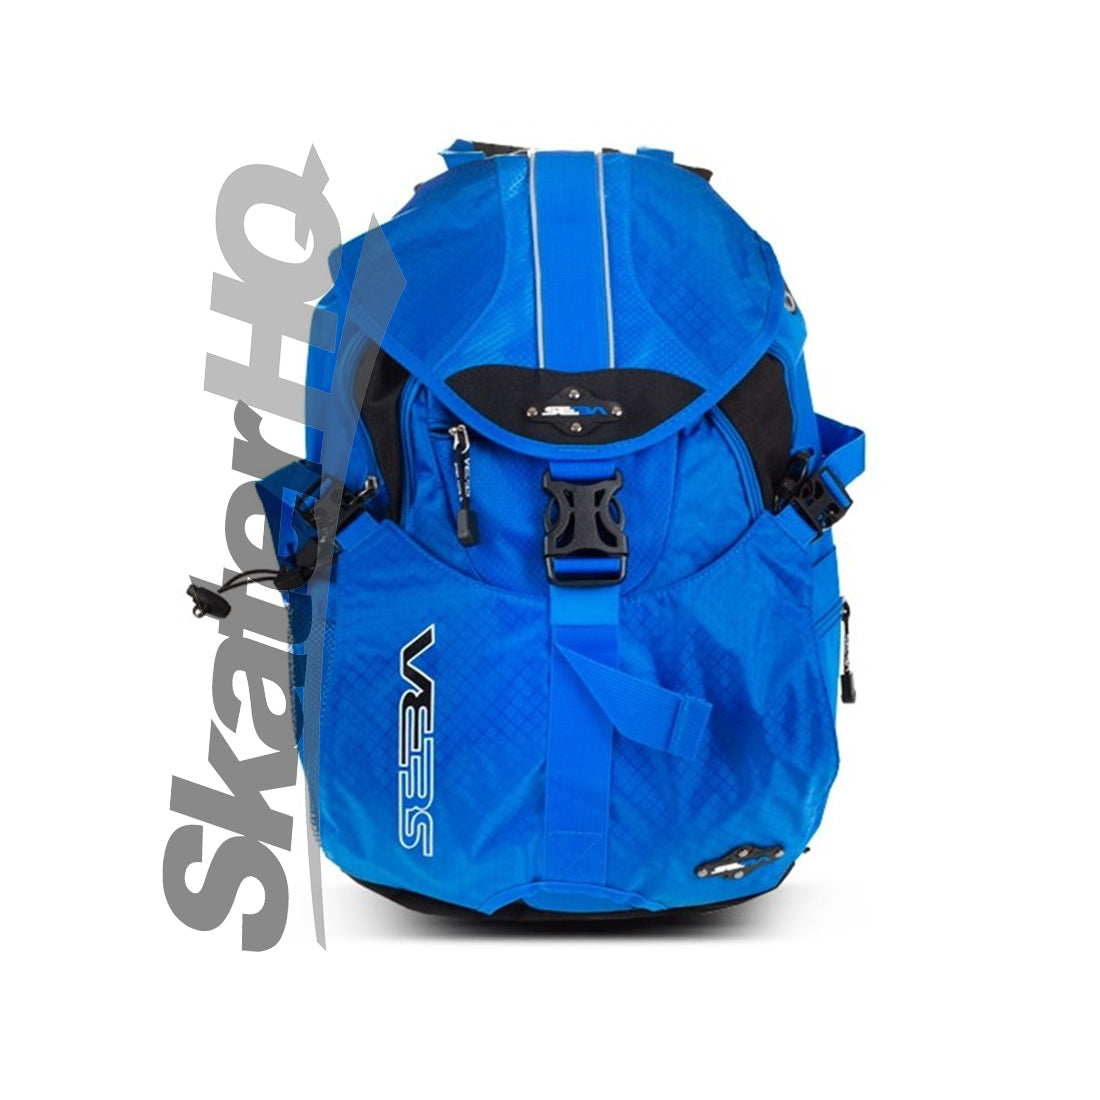 SEBA Backpack Small - Blue Bags and Backpacks